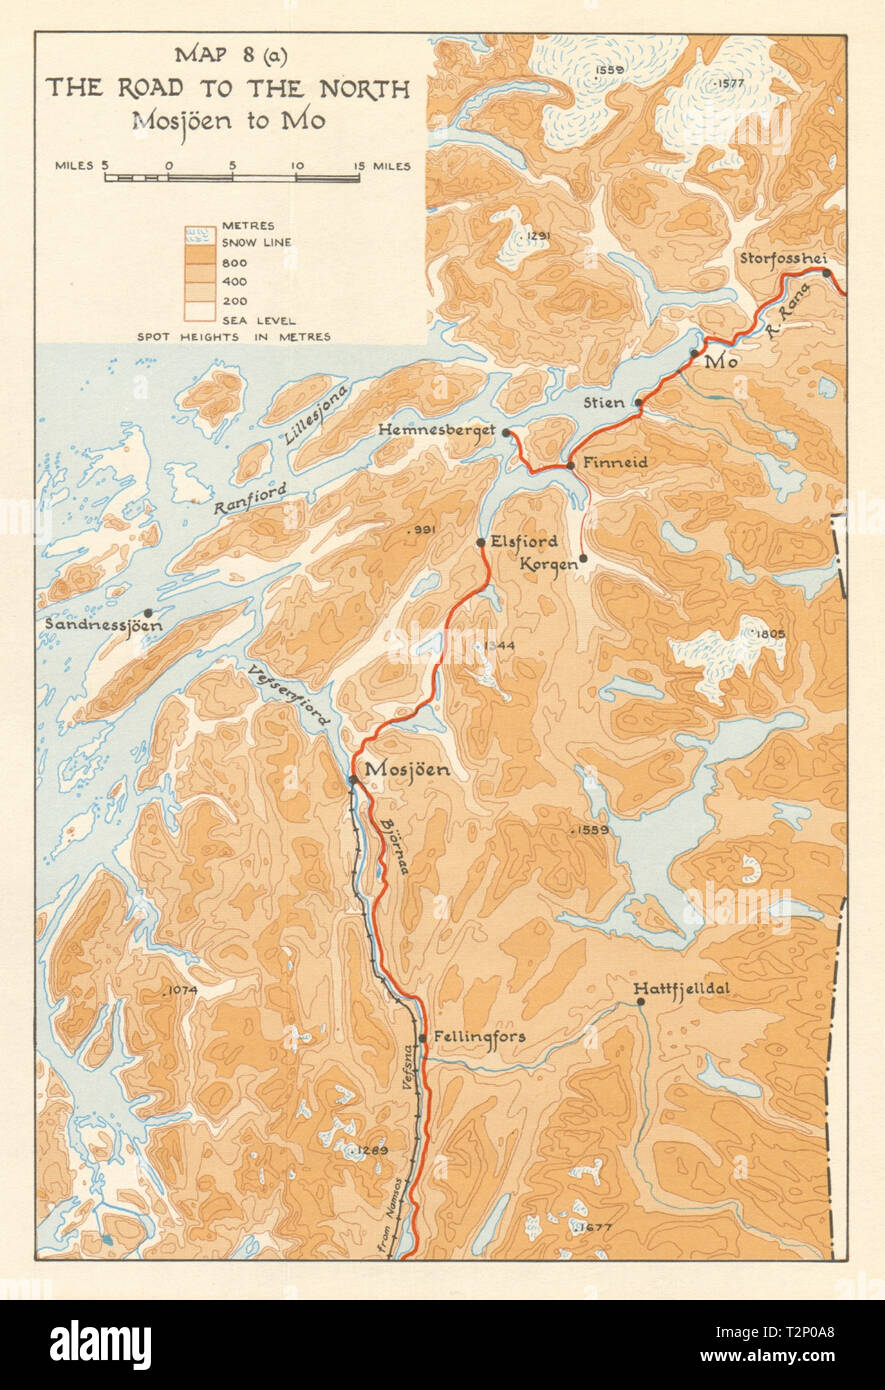 World War 2 Norway Campaign. Mosjoen to Mo road 1940. German Invasion 1952 map Stock Photo